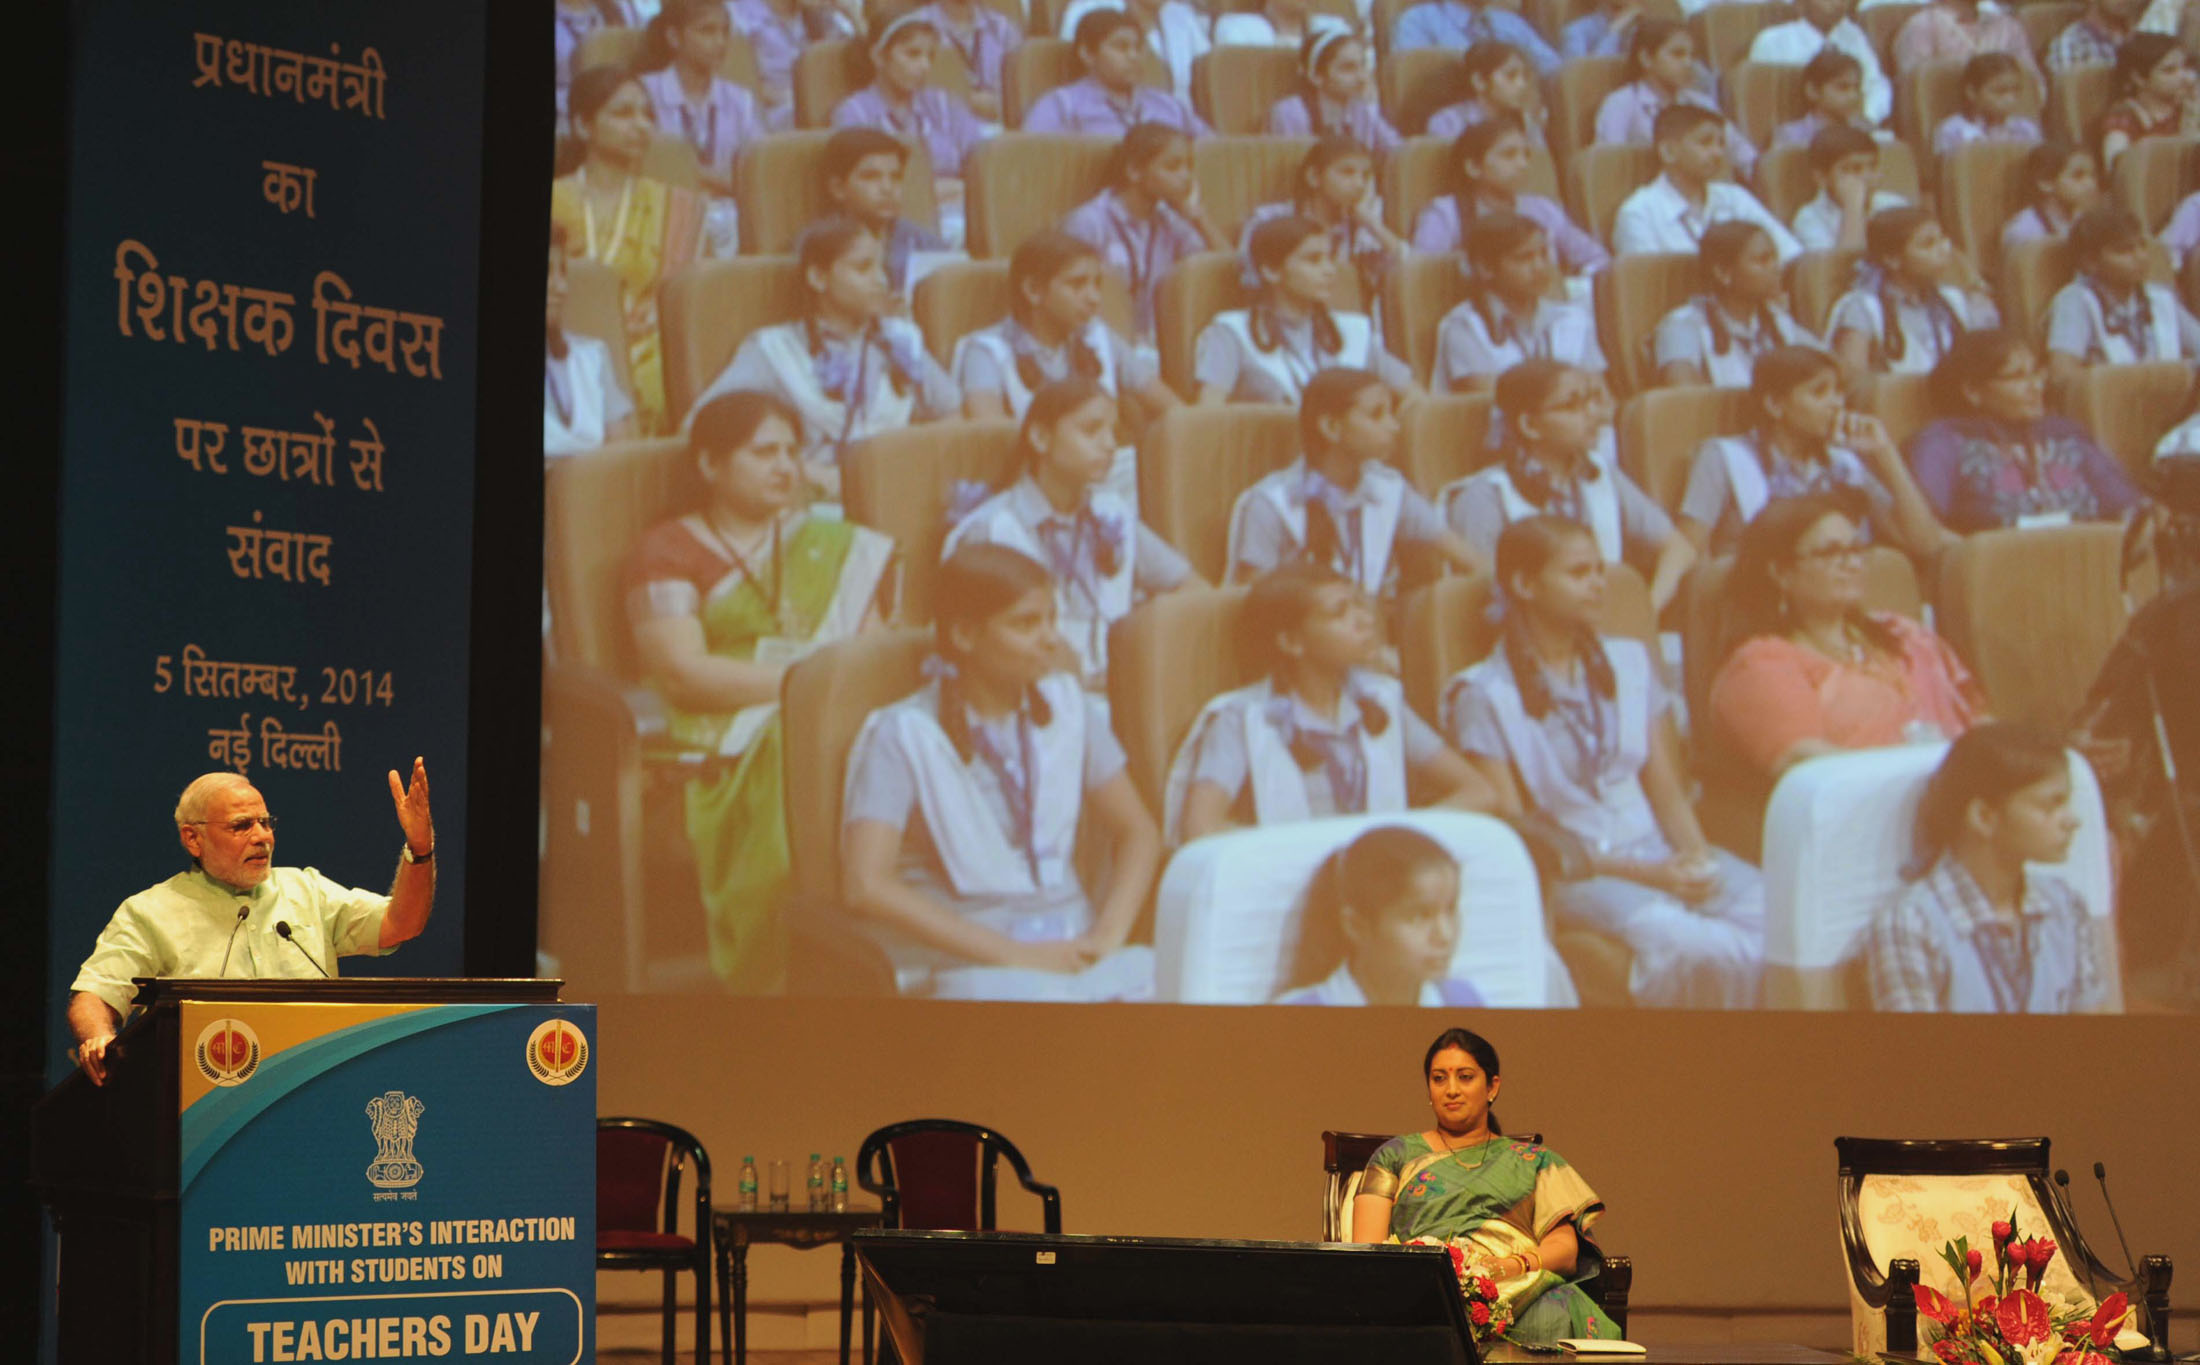 The Prime Minister, Shri Narendra Modi addressing at the "Teachers' Day" function, at Manekshaw Auditorium, in New Delhi on September 05, 2014. The Union Minister for Human Resource Development, Smt. Smriti Irani is also seen.